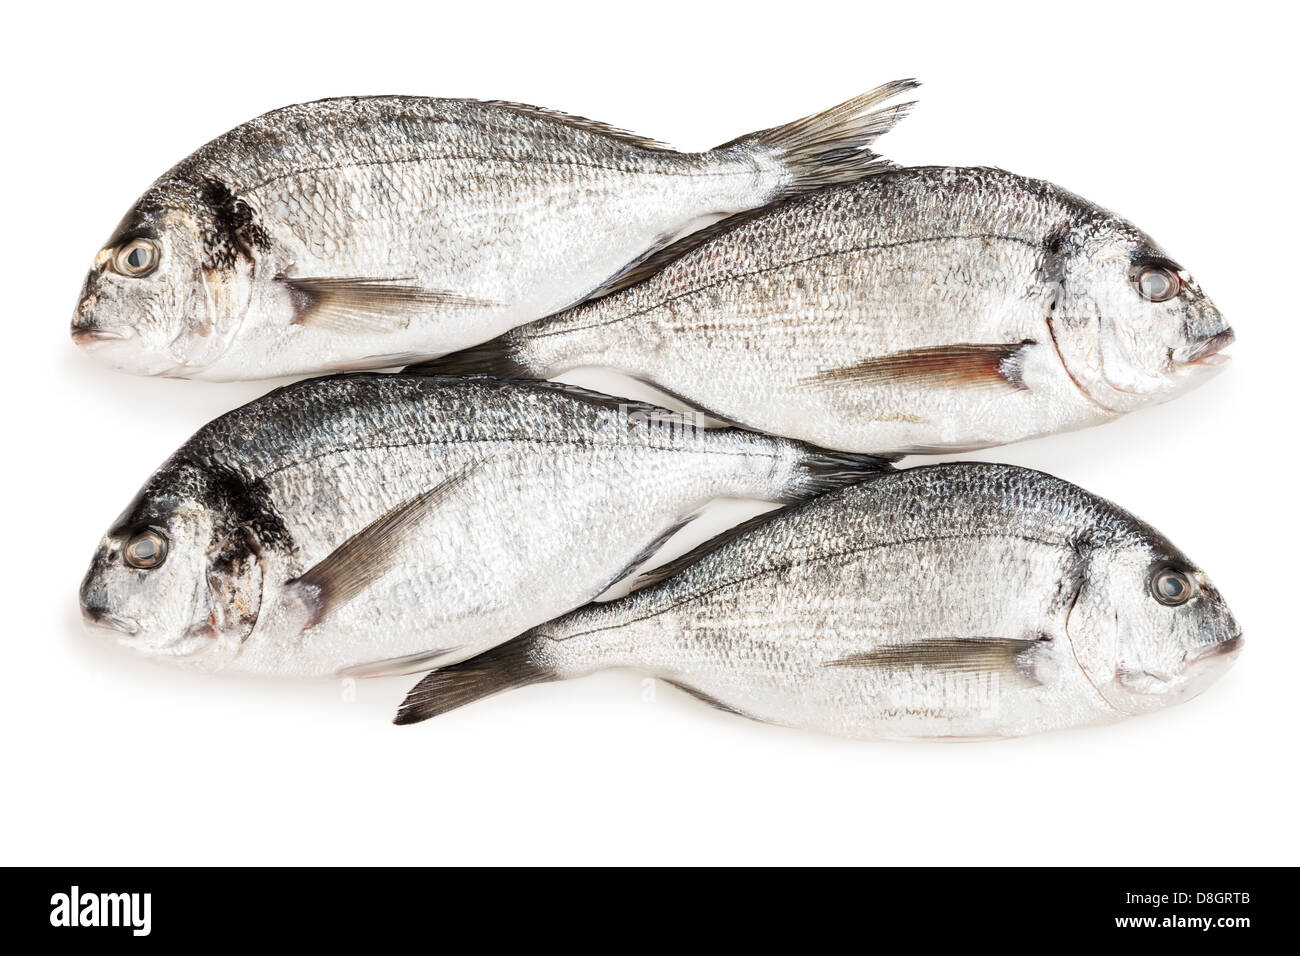 Comida de pescado fotografías e imágenes de alta resolución - Alamy